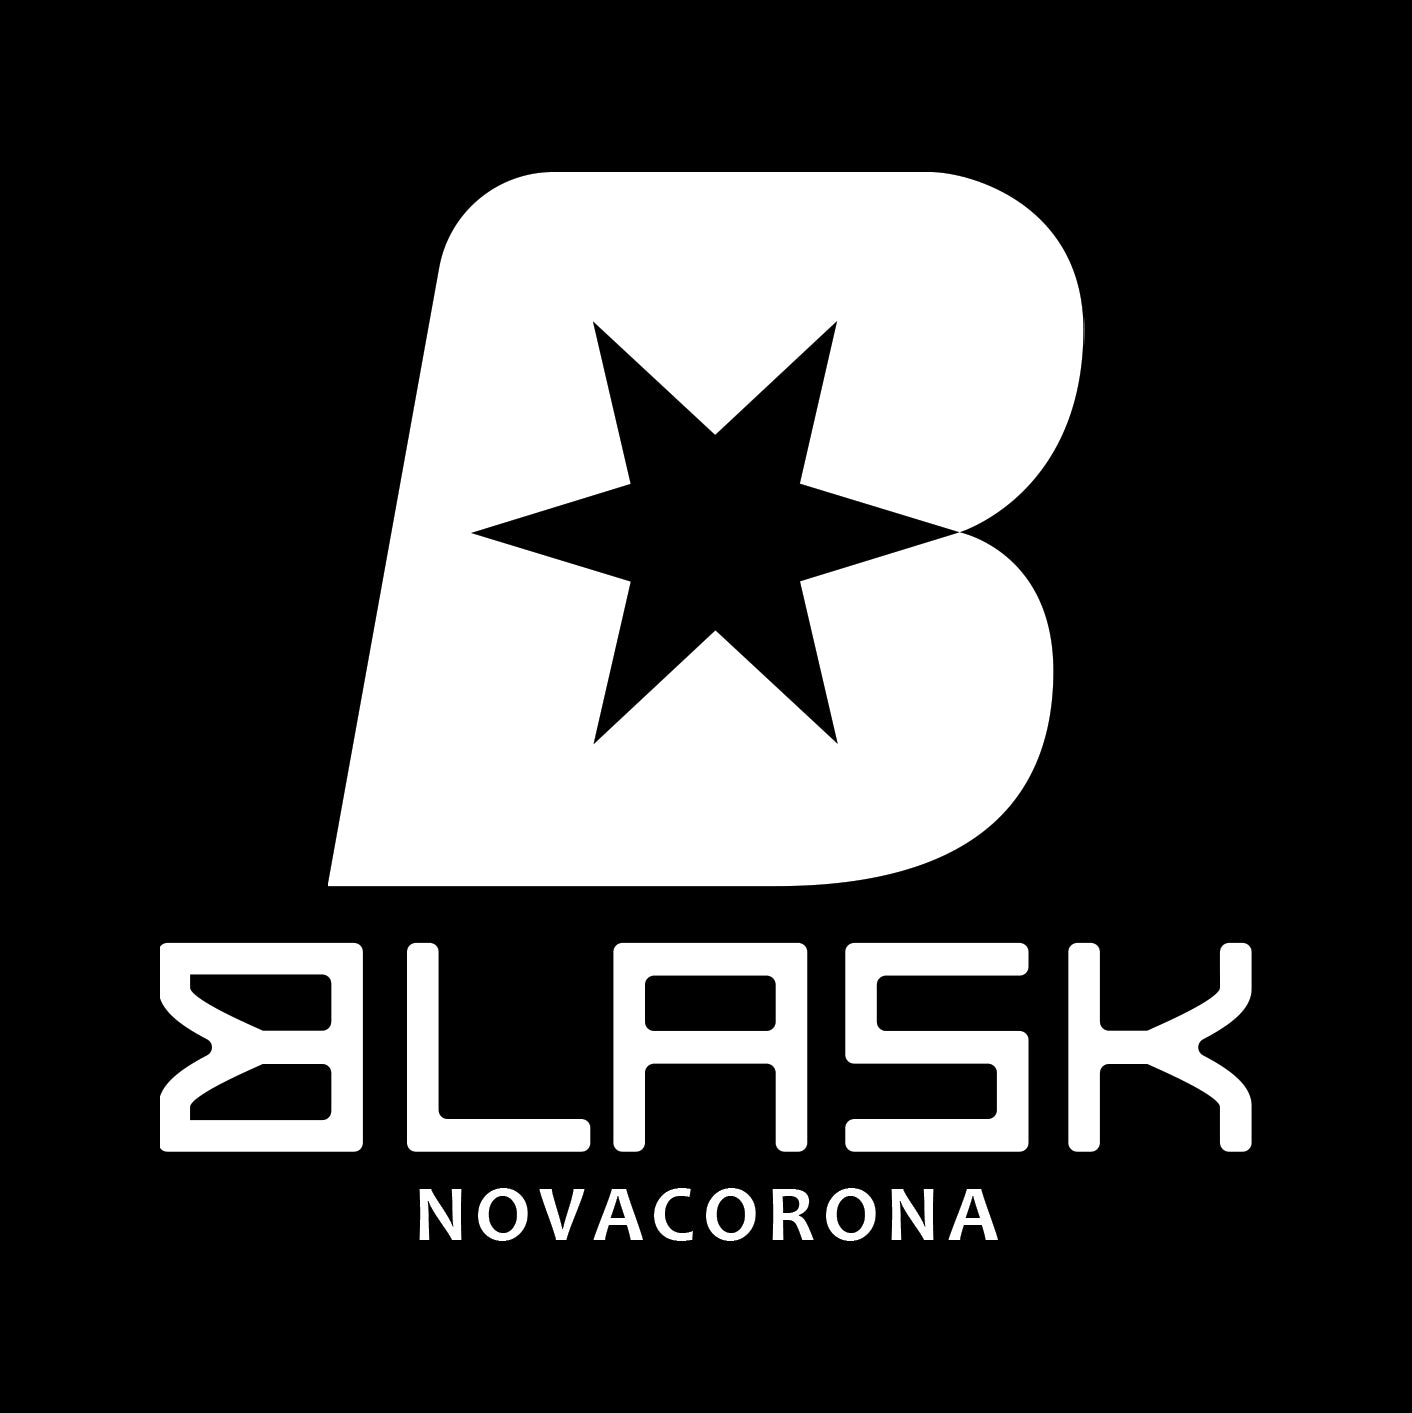 BLASK JAPAN オンラインショップ – BLASK JAPAN NOVACORONA